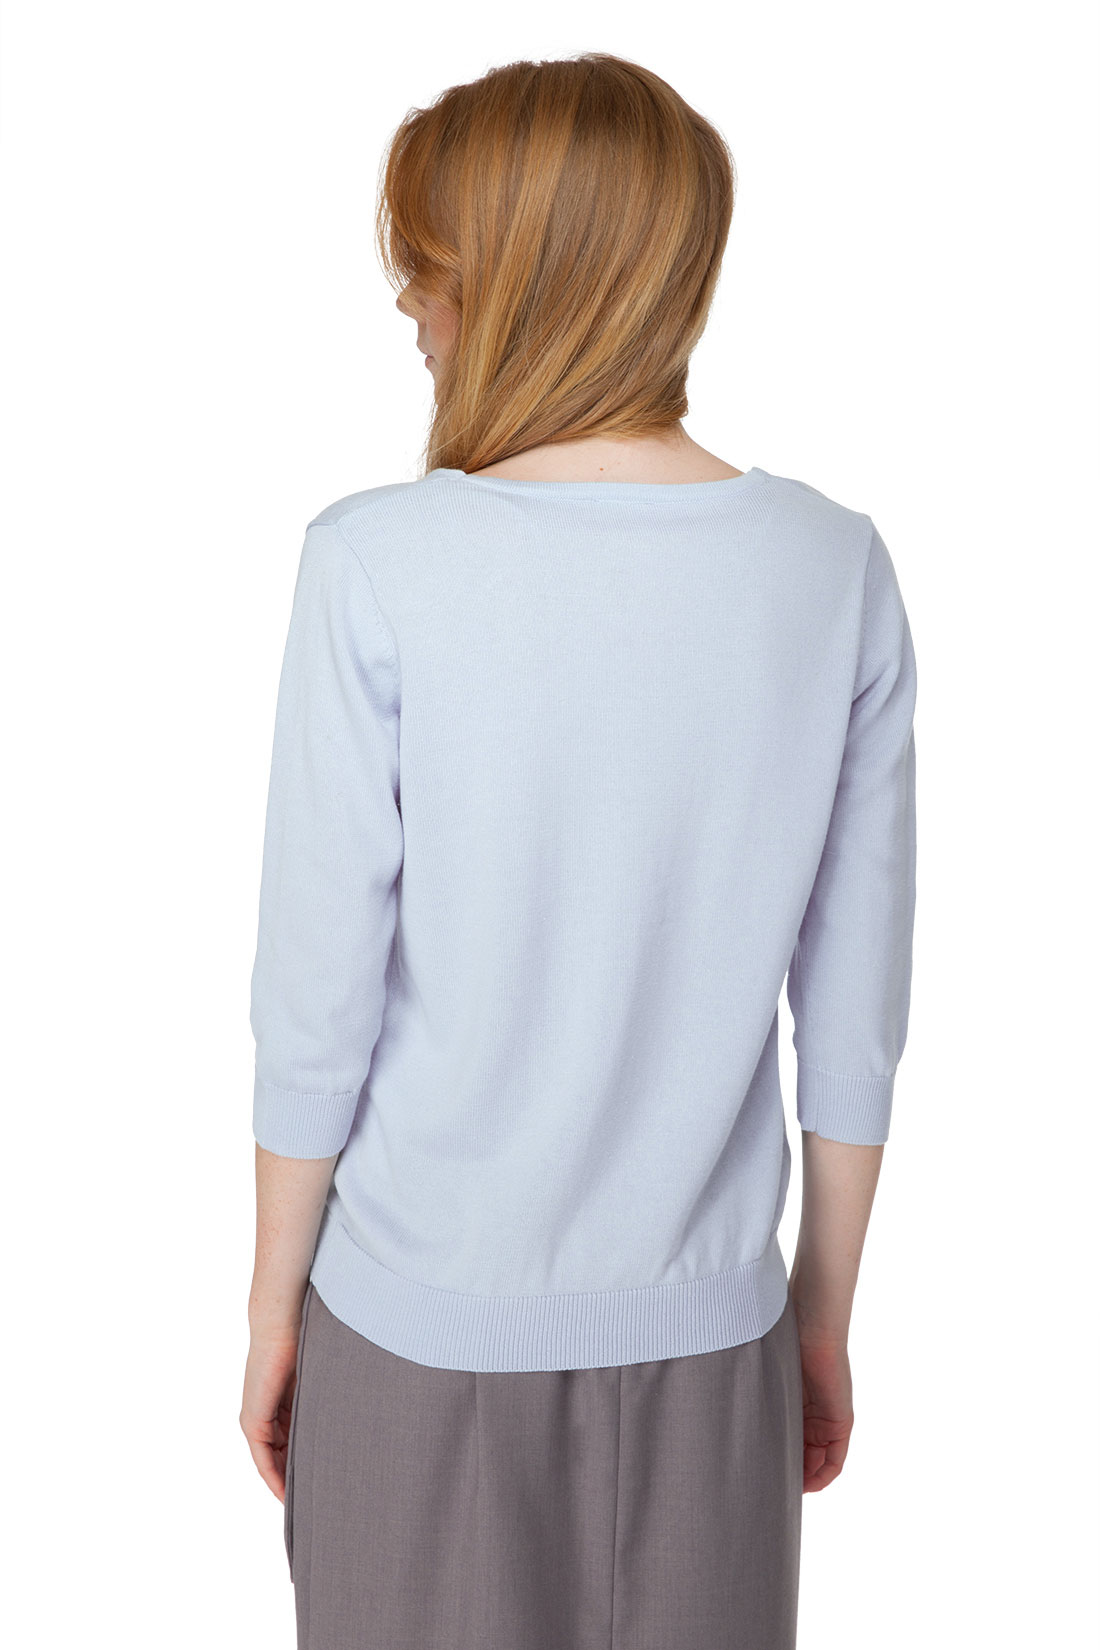 Пуловер с изящным декором (арт. baon B137004), размер XL, цвет голубой Пуловер с изящным декором (арт. baon B137004) - фото 2